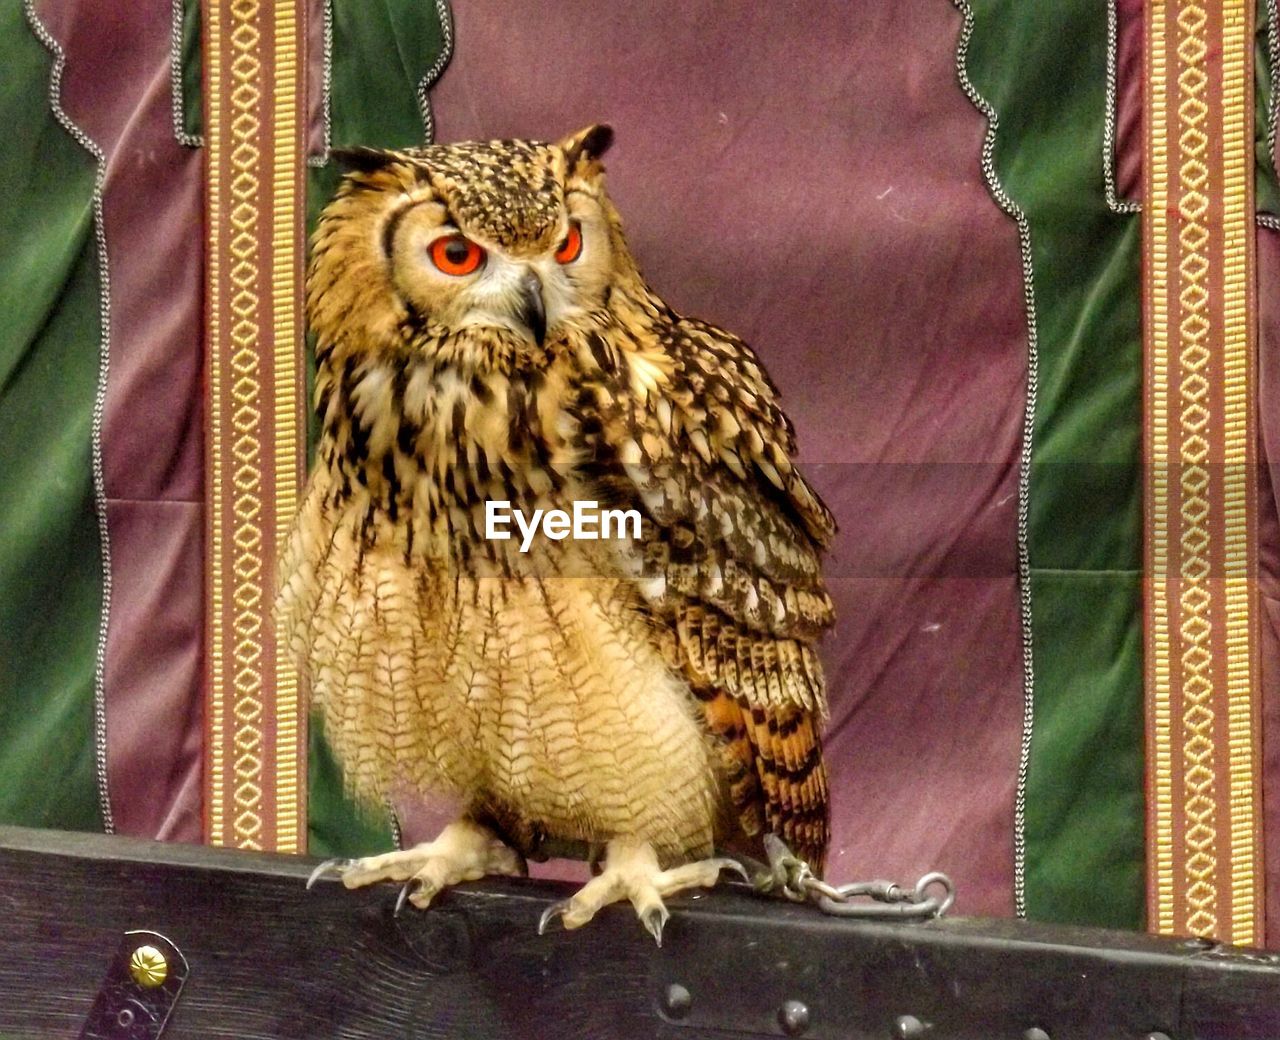 Owl at market looking away